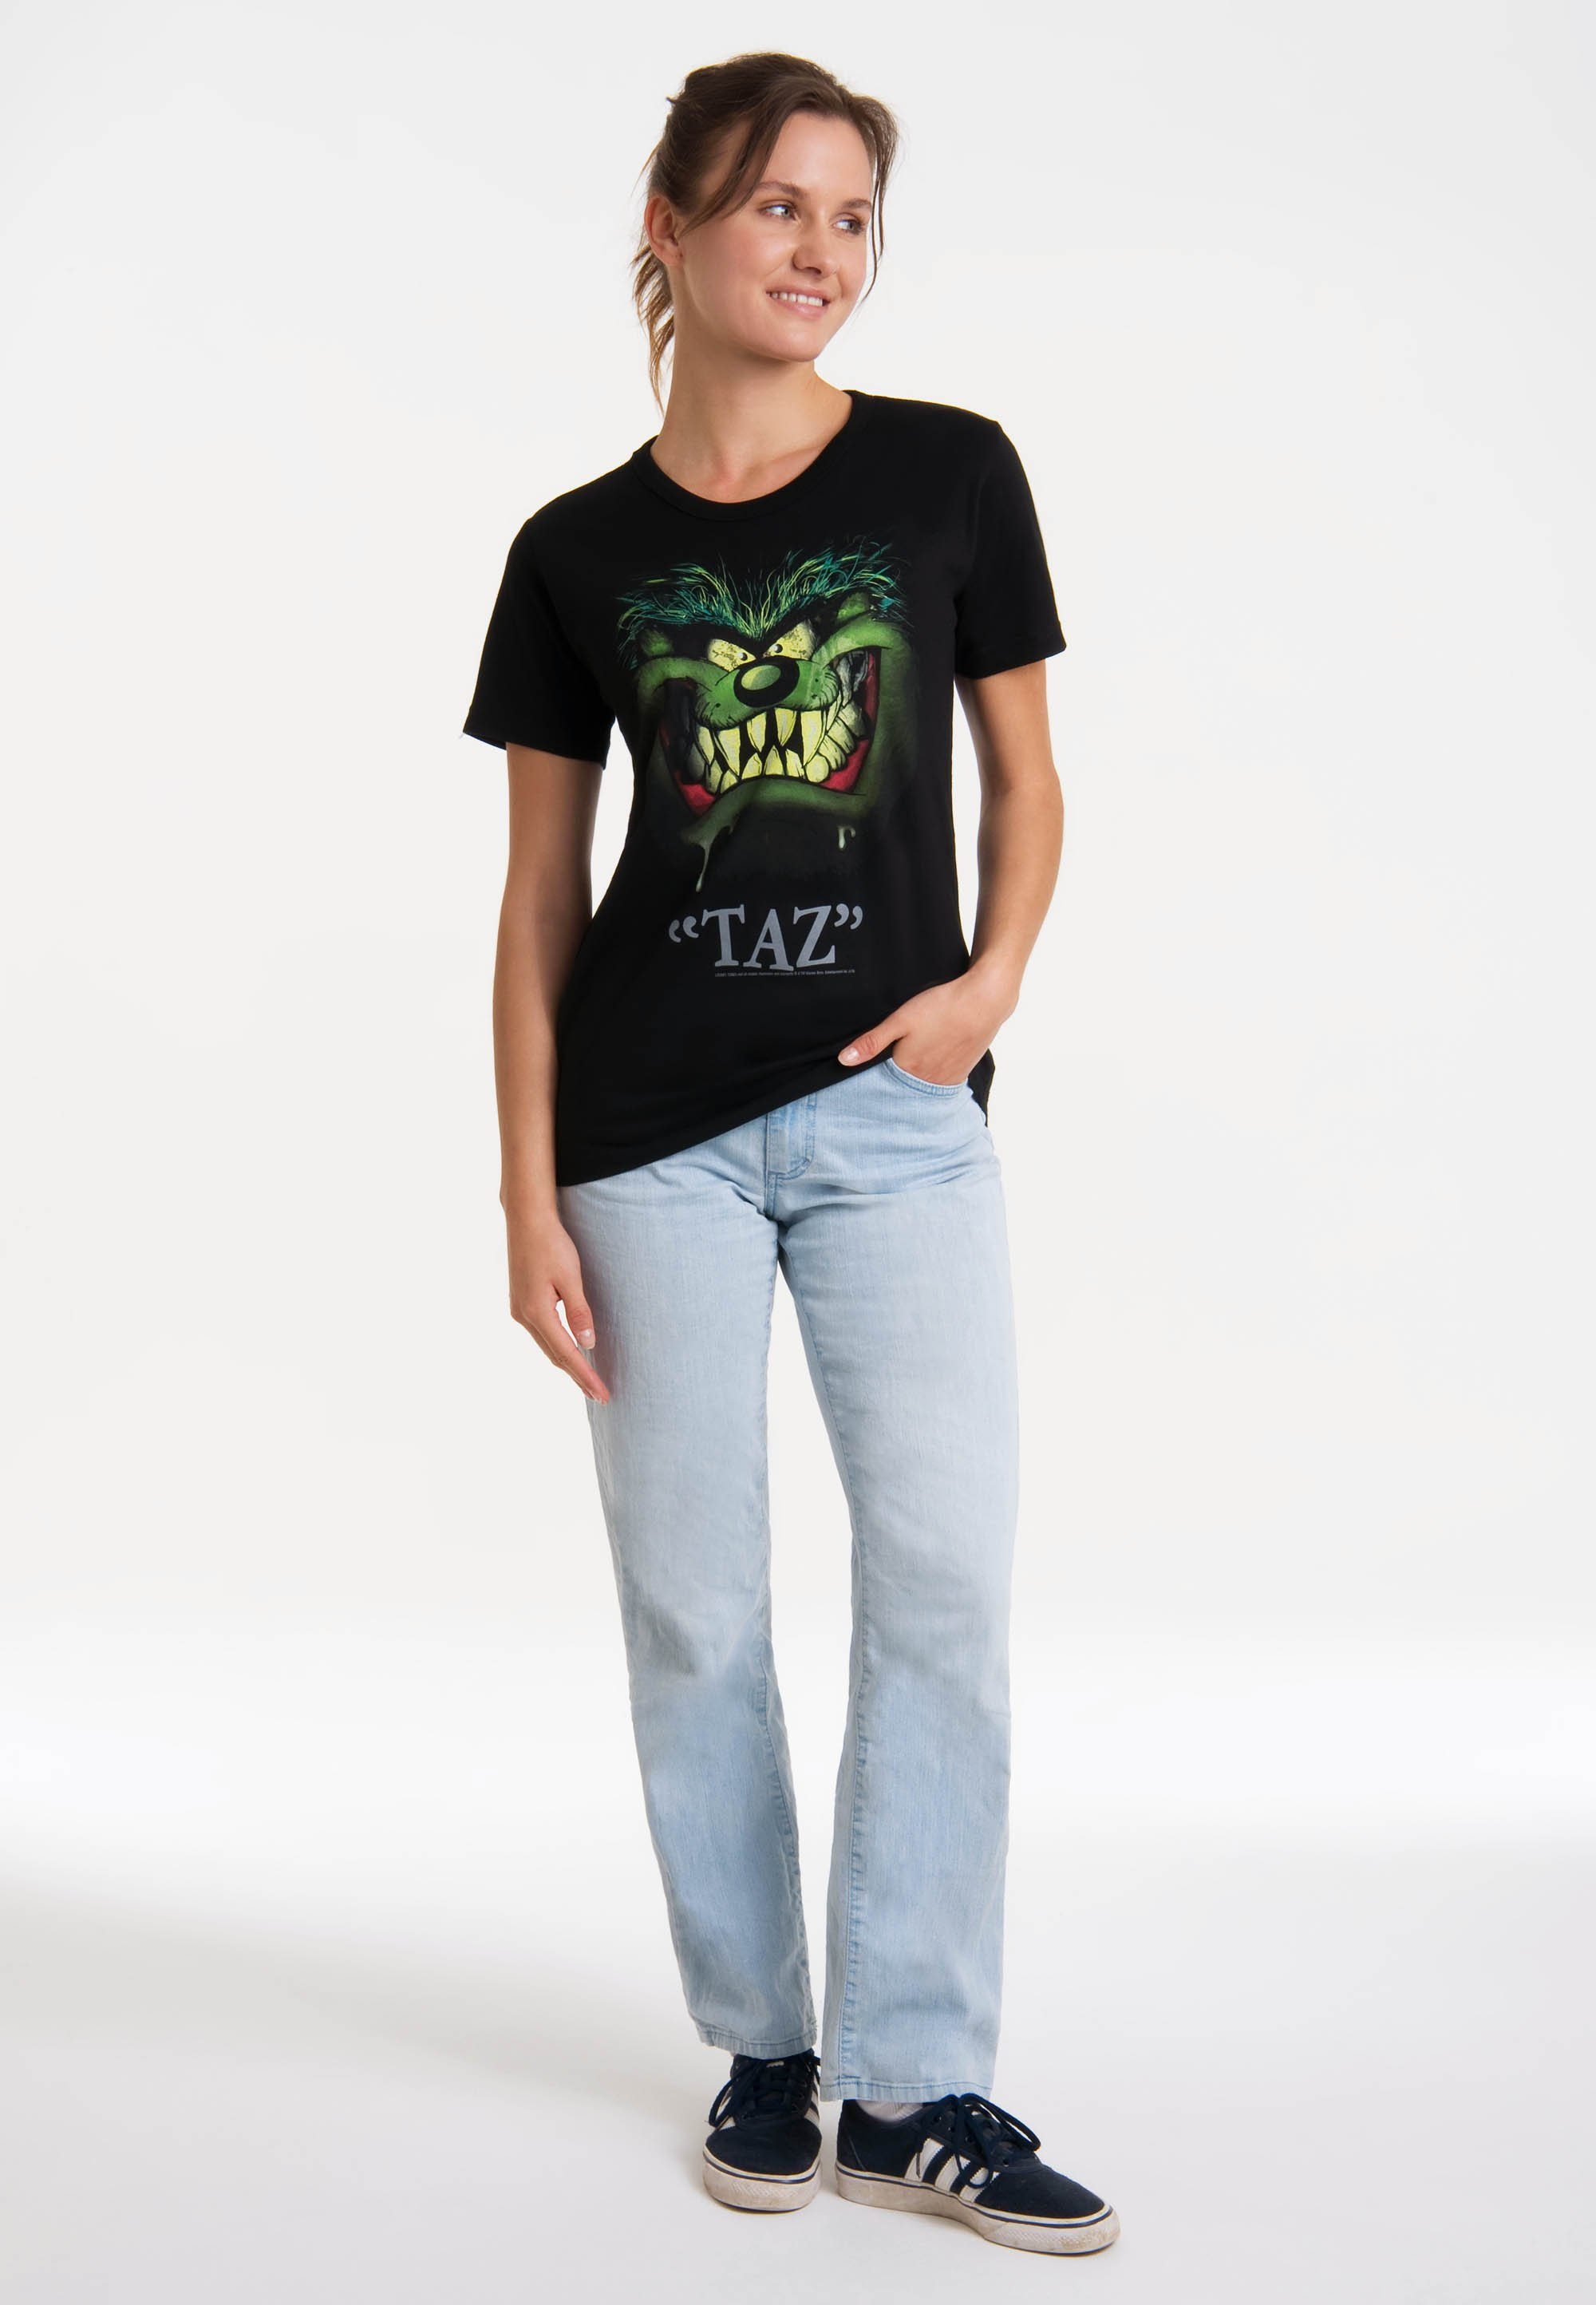 LOGOSHIRT T-Shirt Looney Portrait Tunes Print Taz - mit lizenziertem